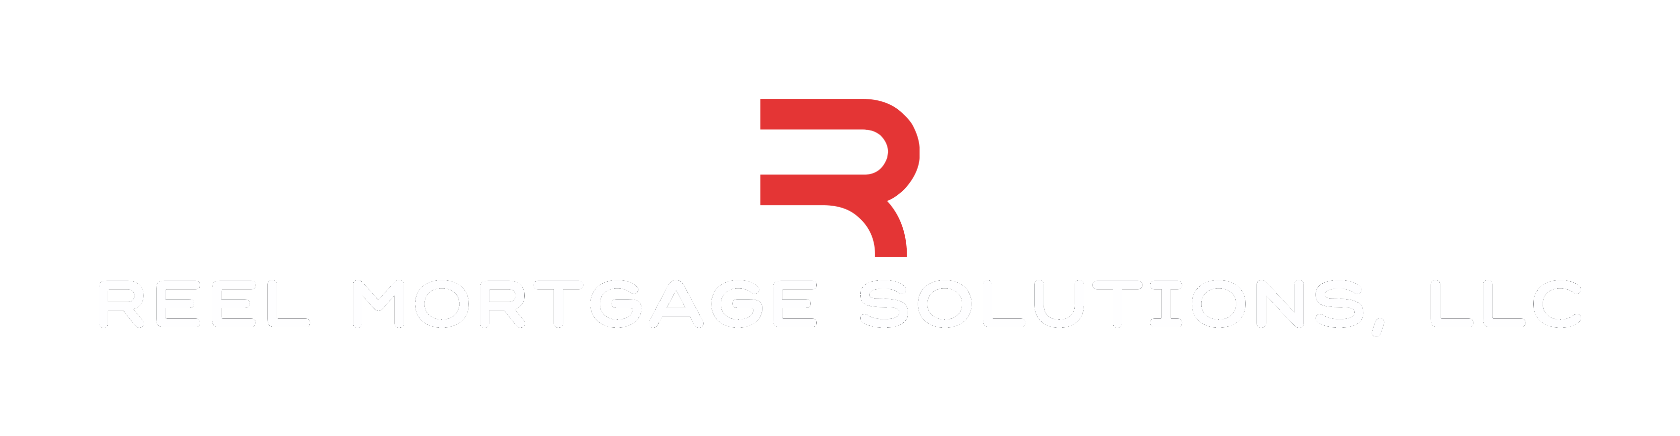 Reel Mortgage Solutions, LLC